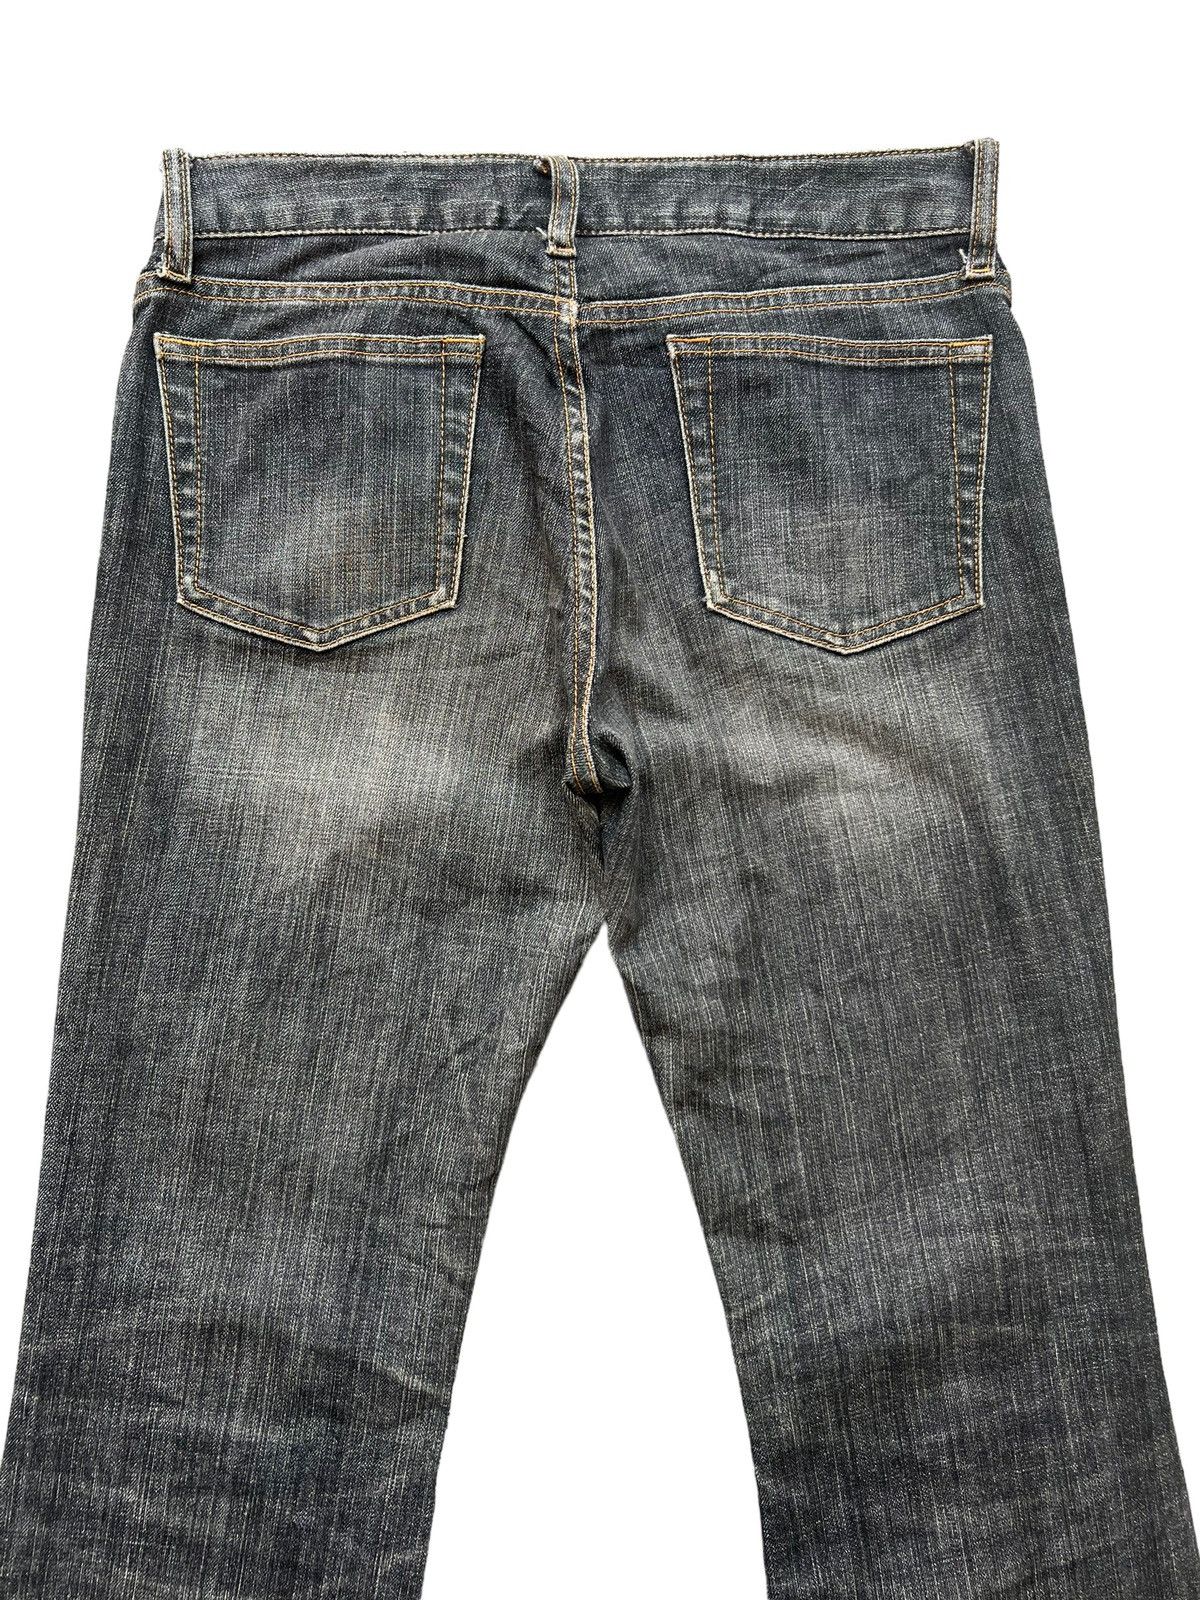 Uniqlo Black Low Rise Bootcut Flare Denim Jeans 30x29 - 5